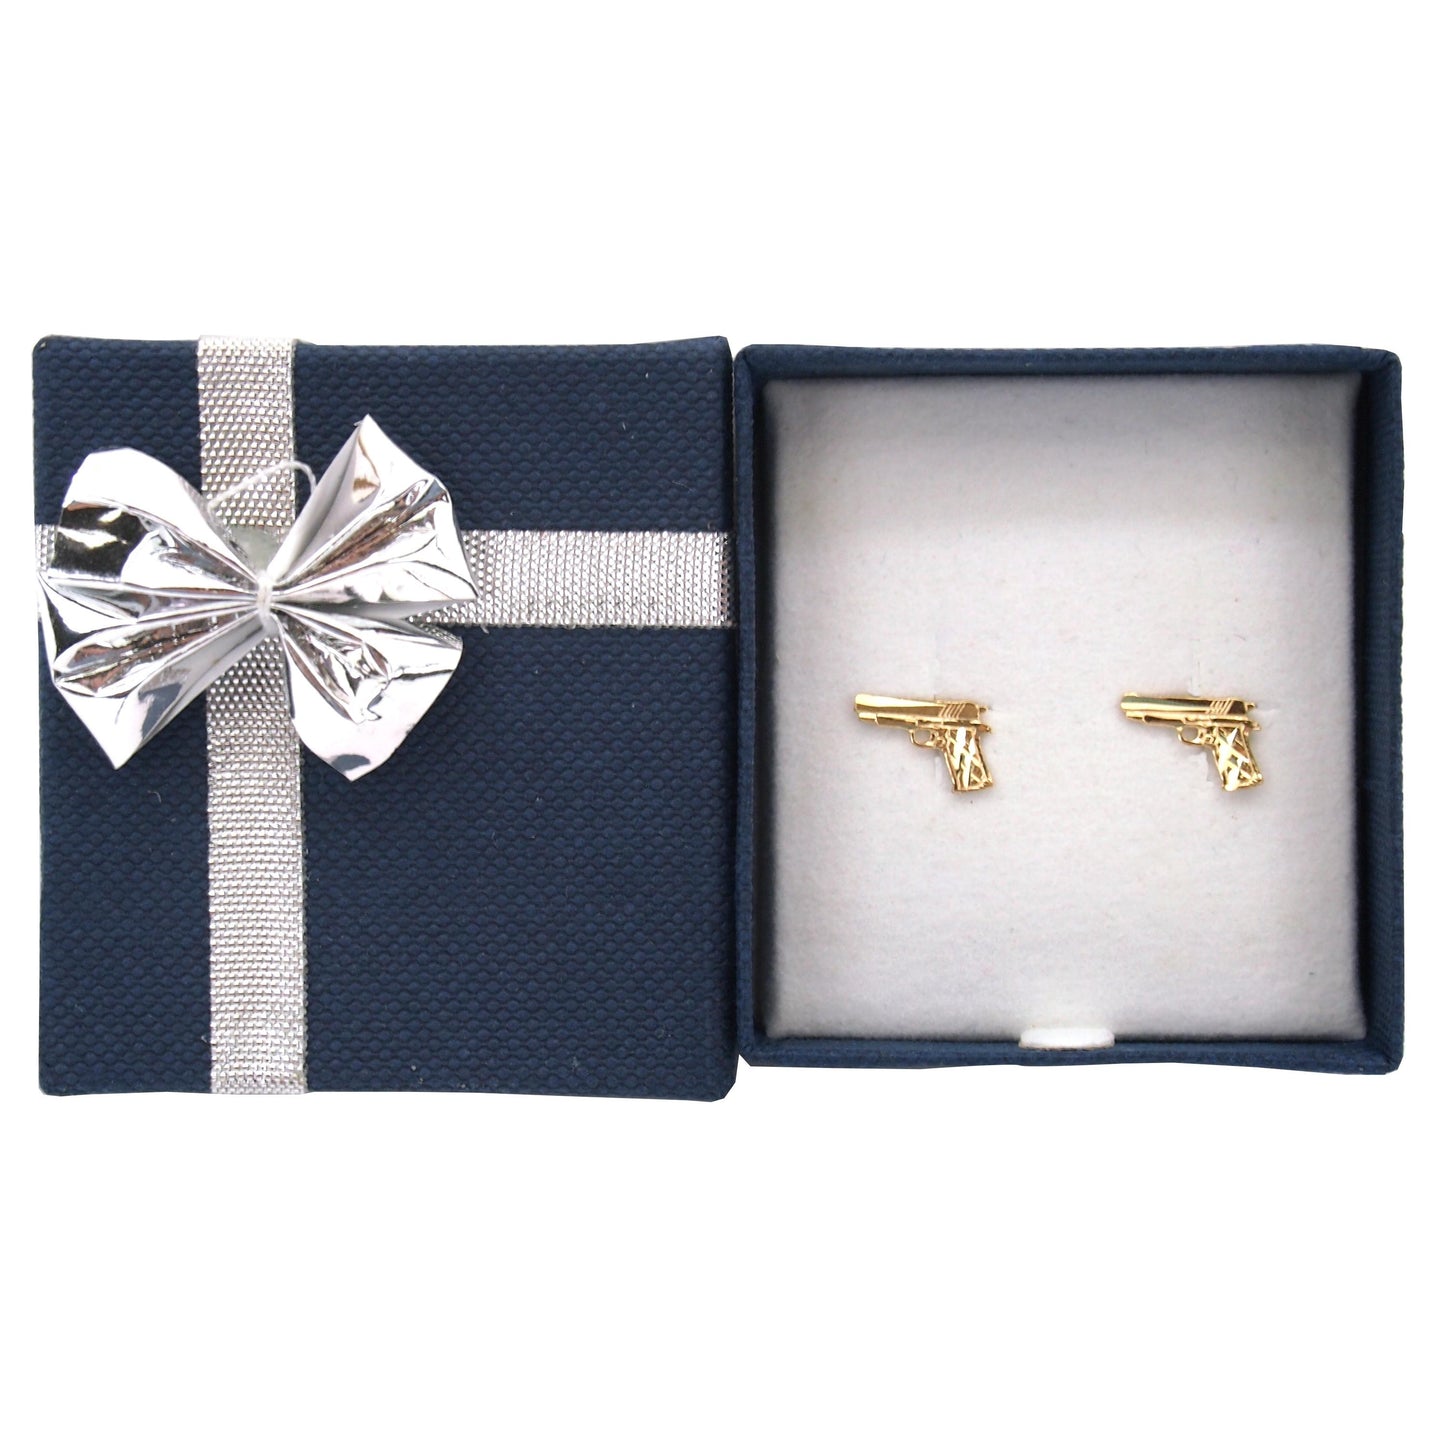 14K Yellow Gold Handgun Pistol Gun Stud Earrings with Bow Tie Jewelry Gift Box